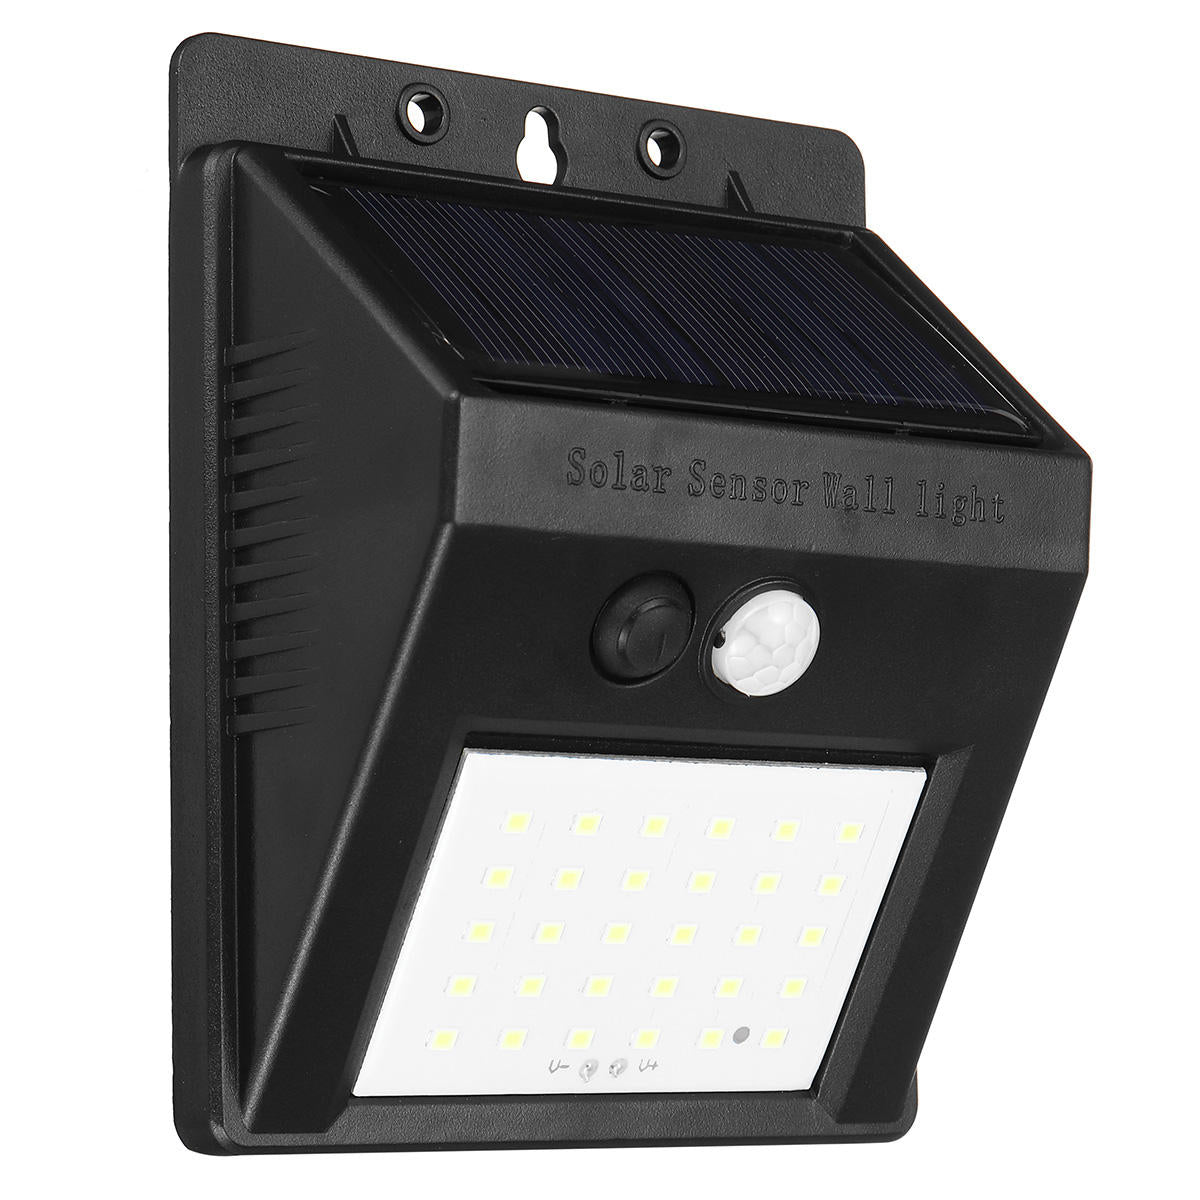 30/40 LED IP65 Auto Sensing Solar Light Outdoor Solar Power Wall lamp Waterproof PIR Motion Sensor For Garden Yard Patio